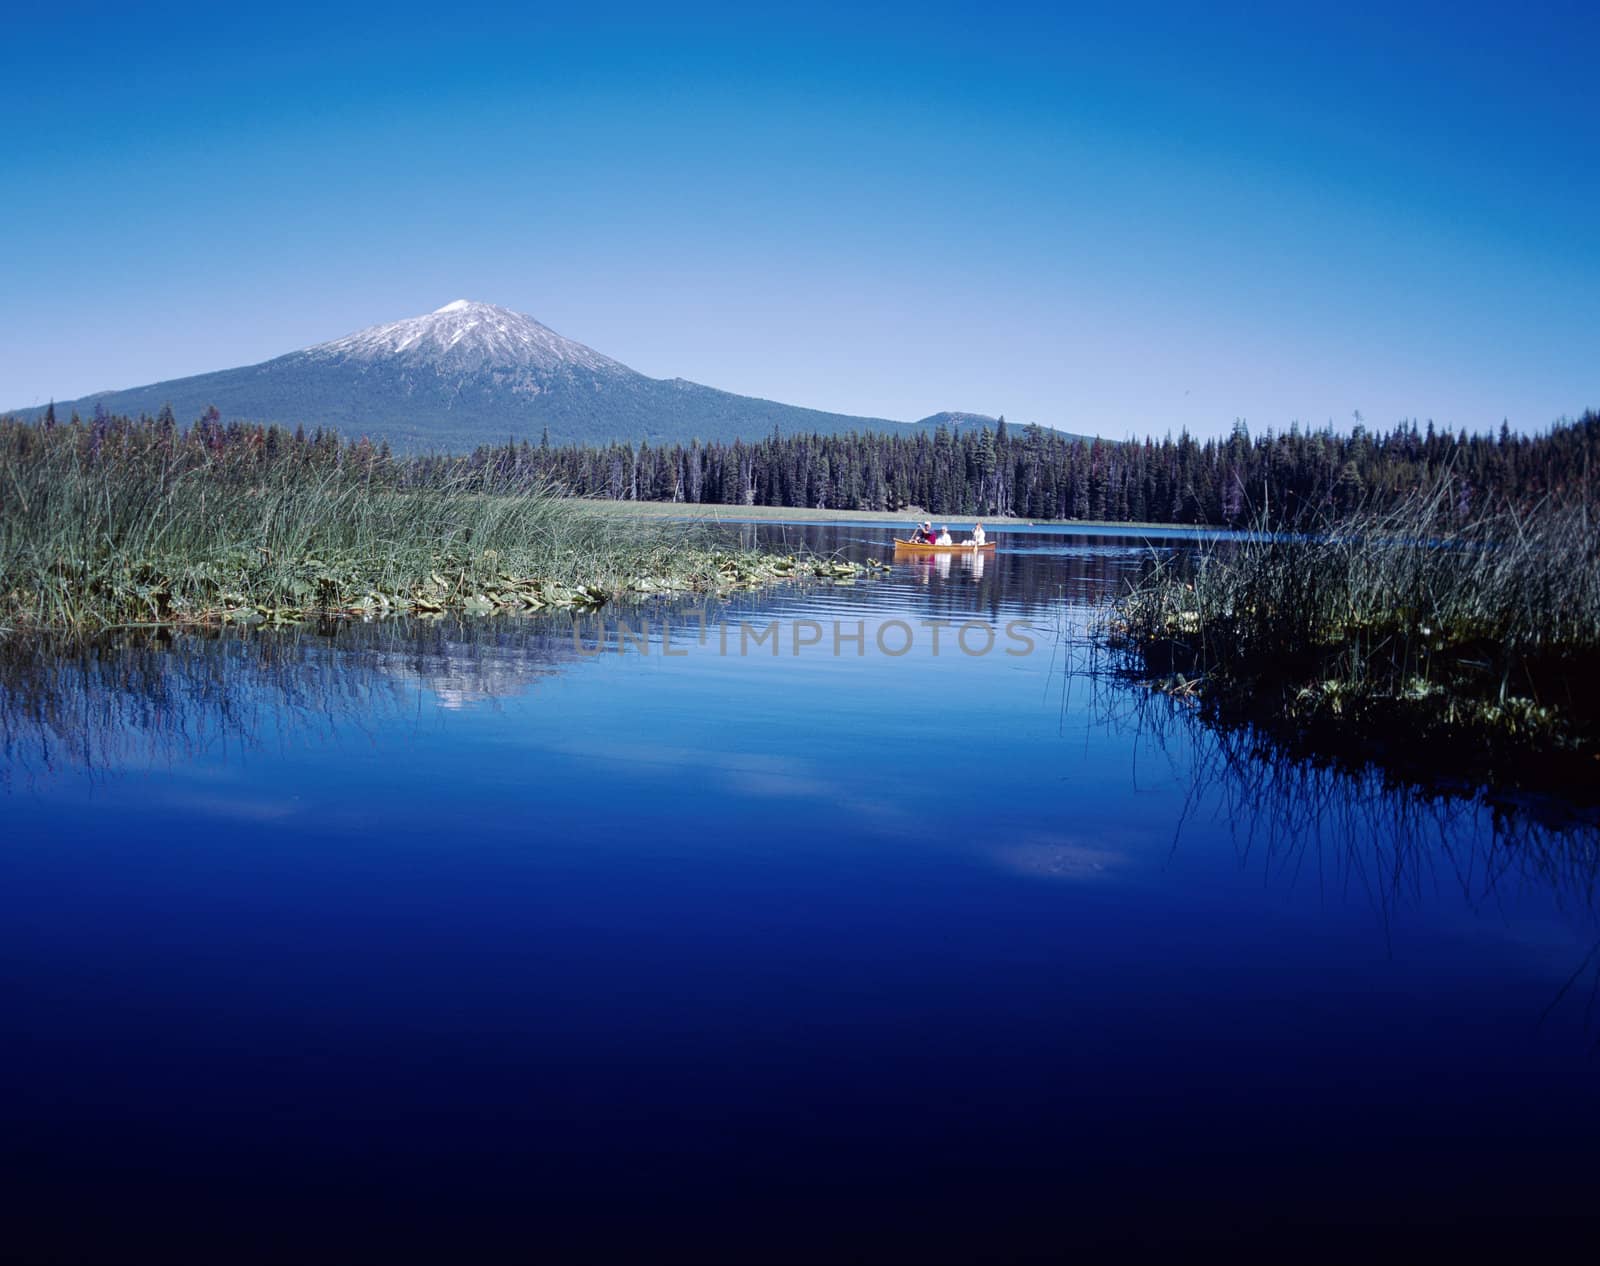 Majestic mountain in Cascades range in Oregon reflected in deep blue lake